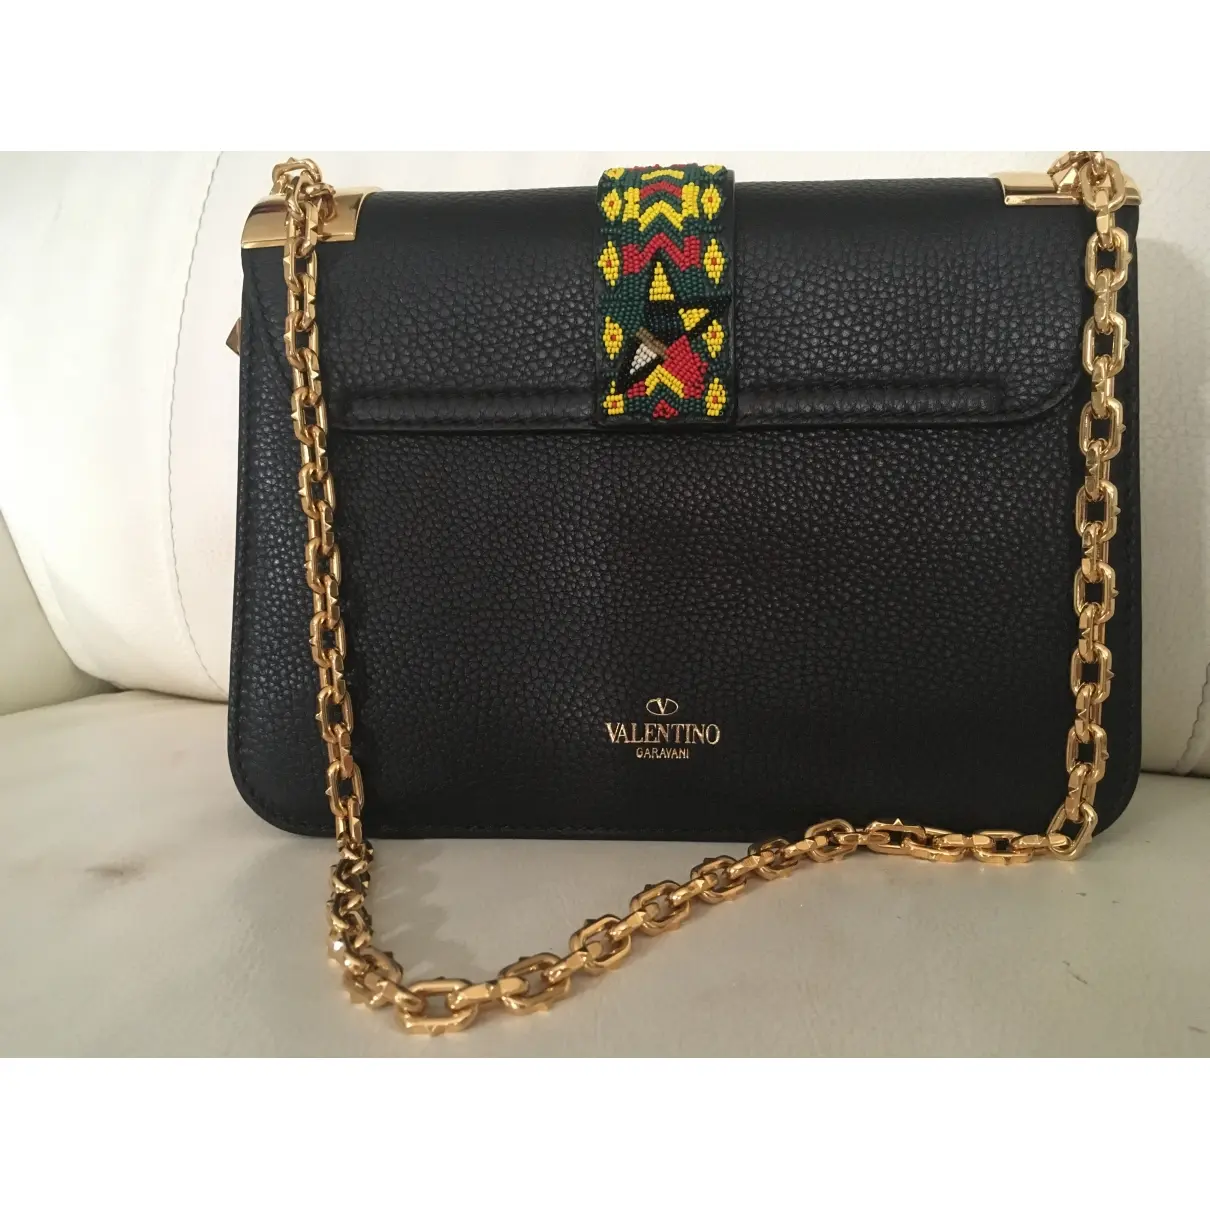 Valentino Garavani B-rockstud leather handbag for sale